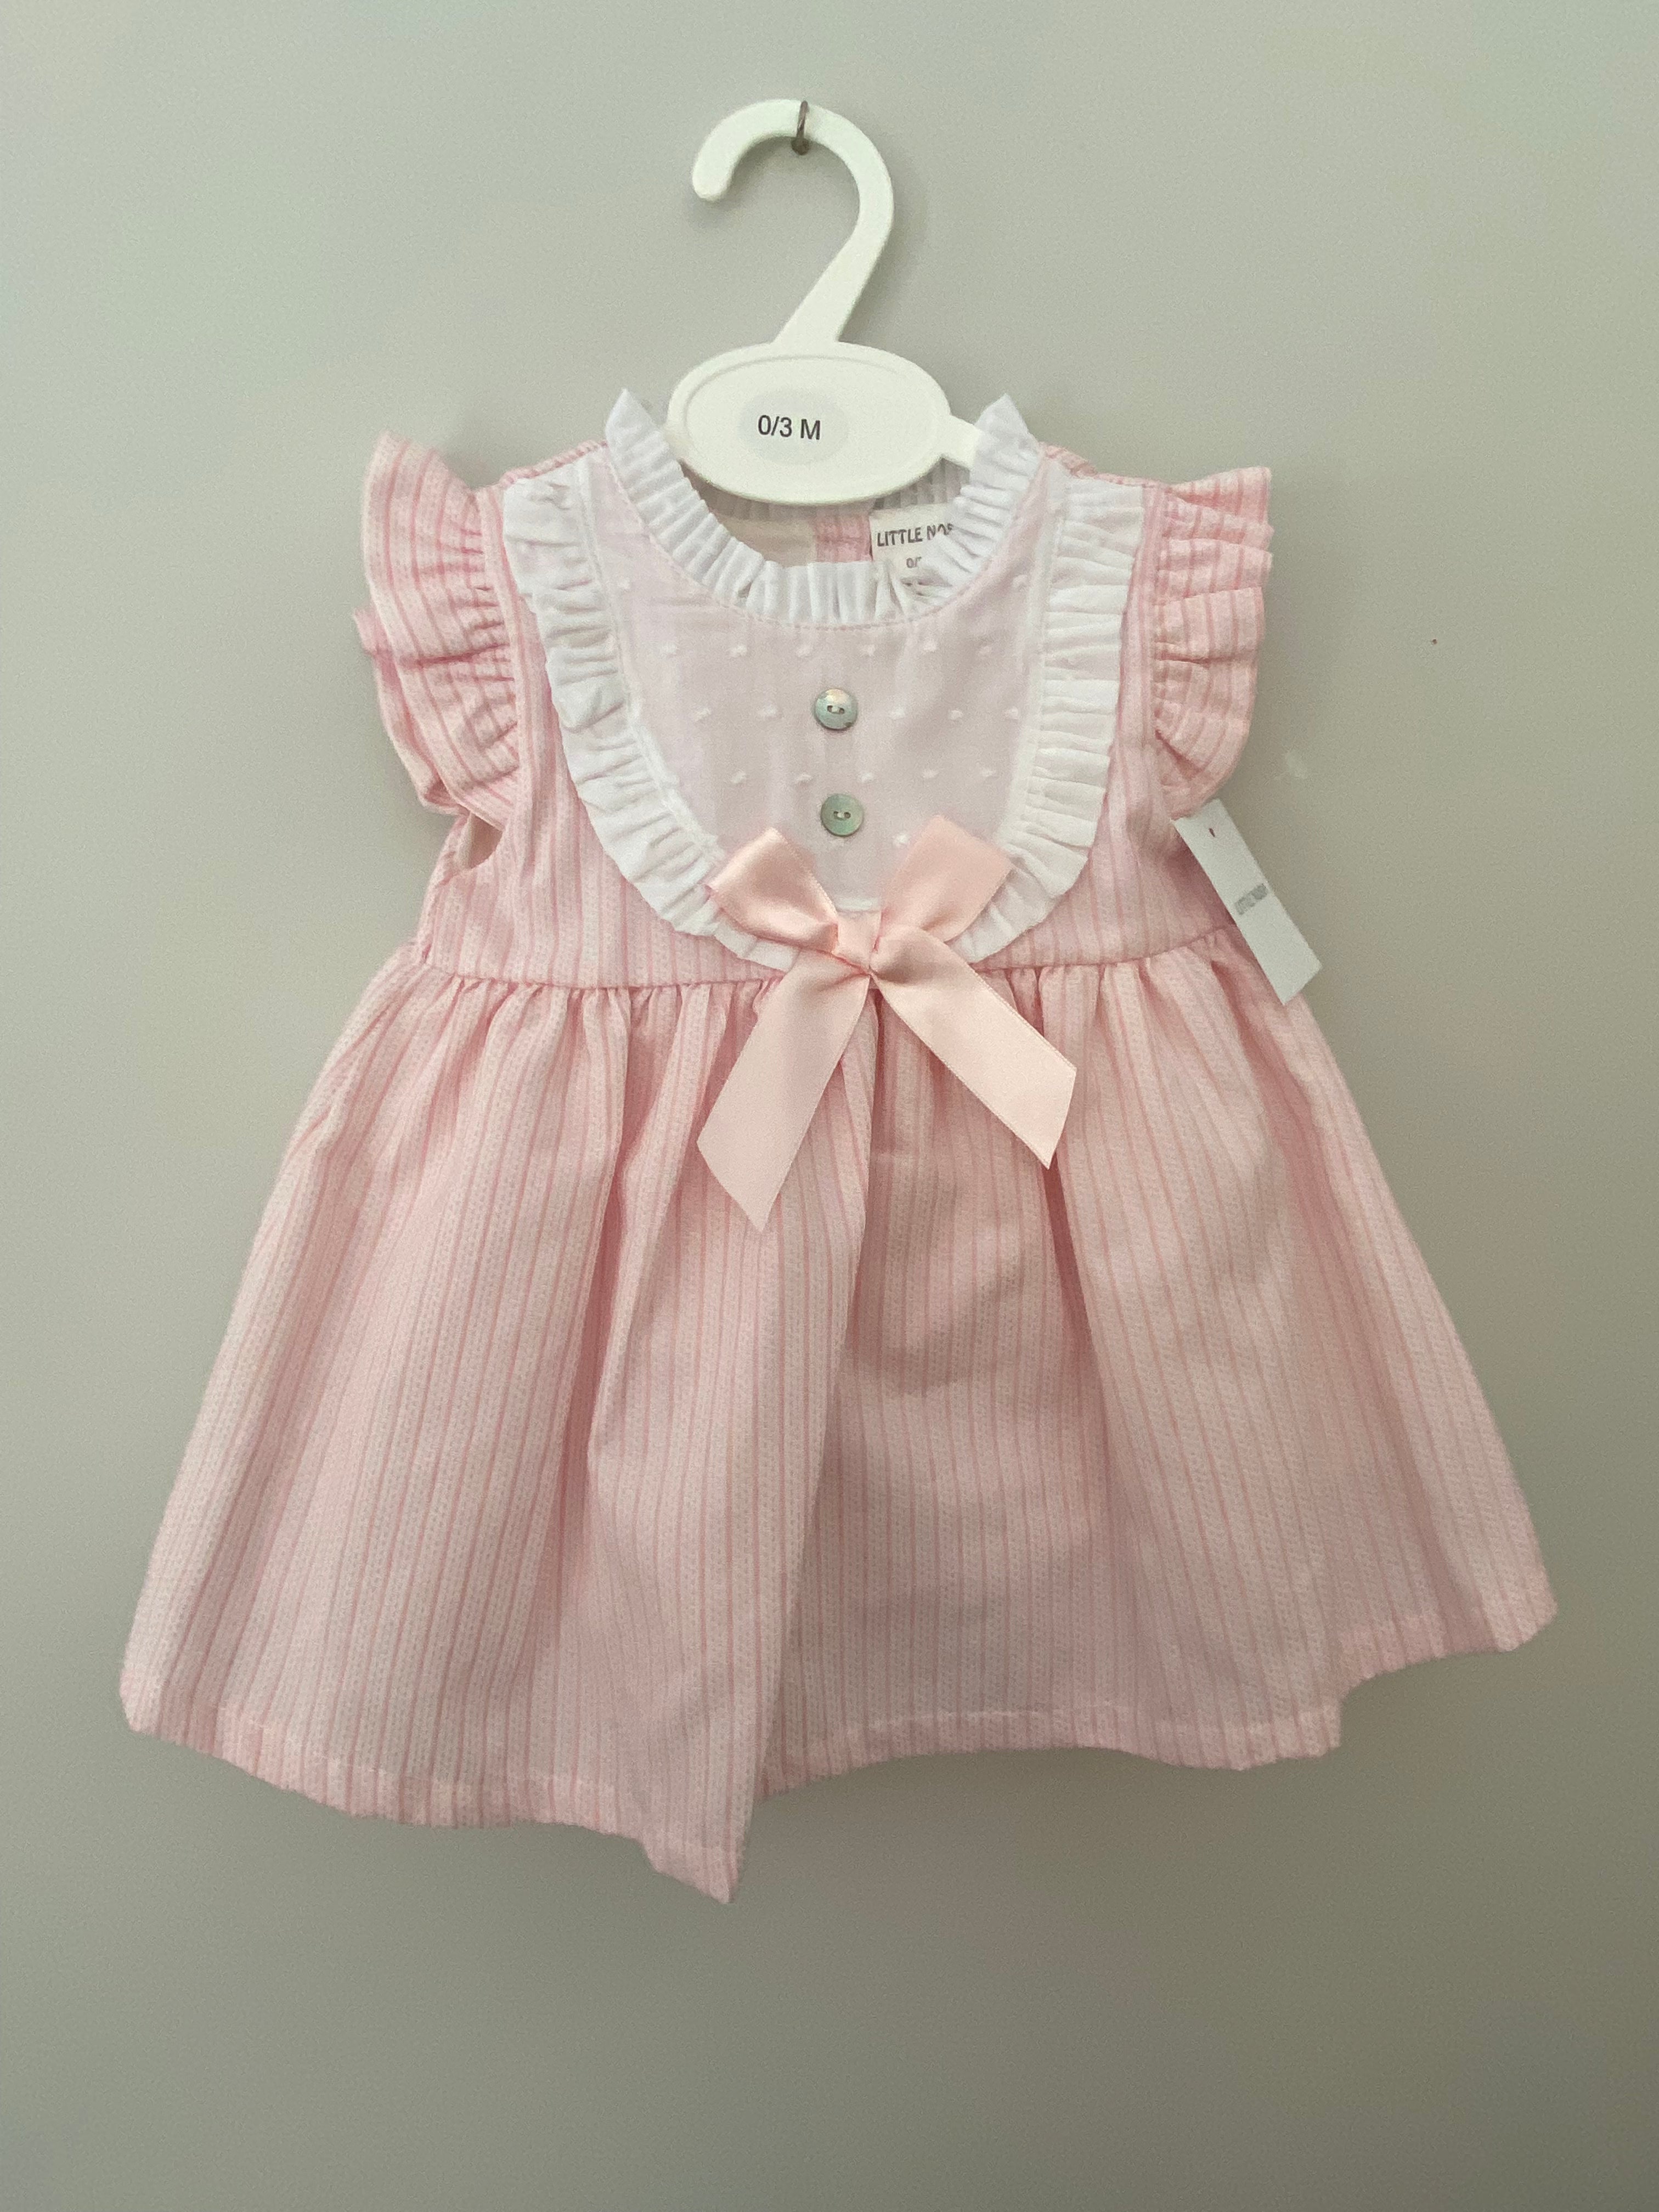 Little Nosh - Girls Pink Dress with Bow Detail - PQ608